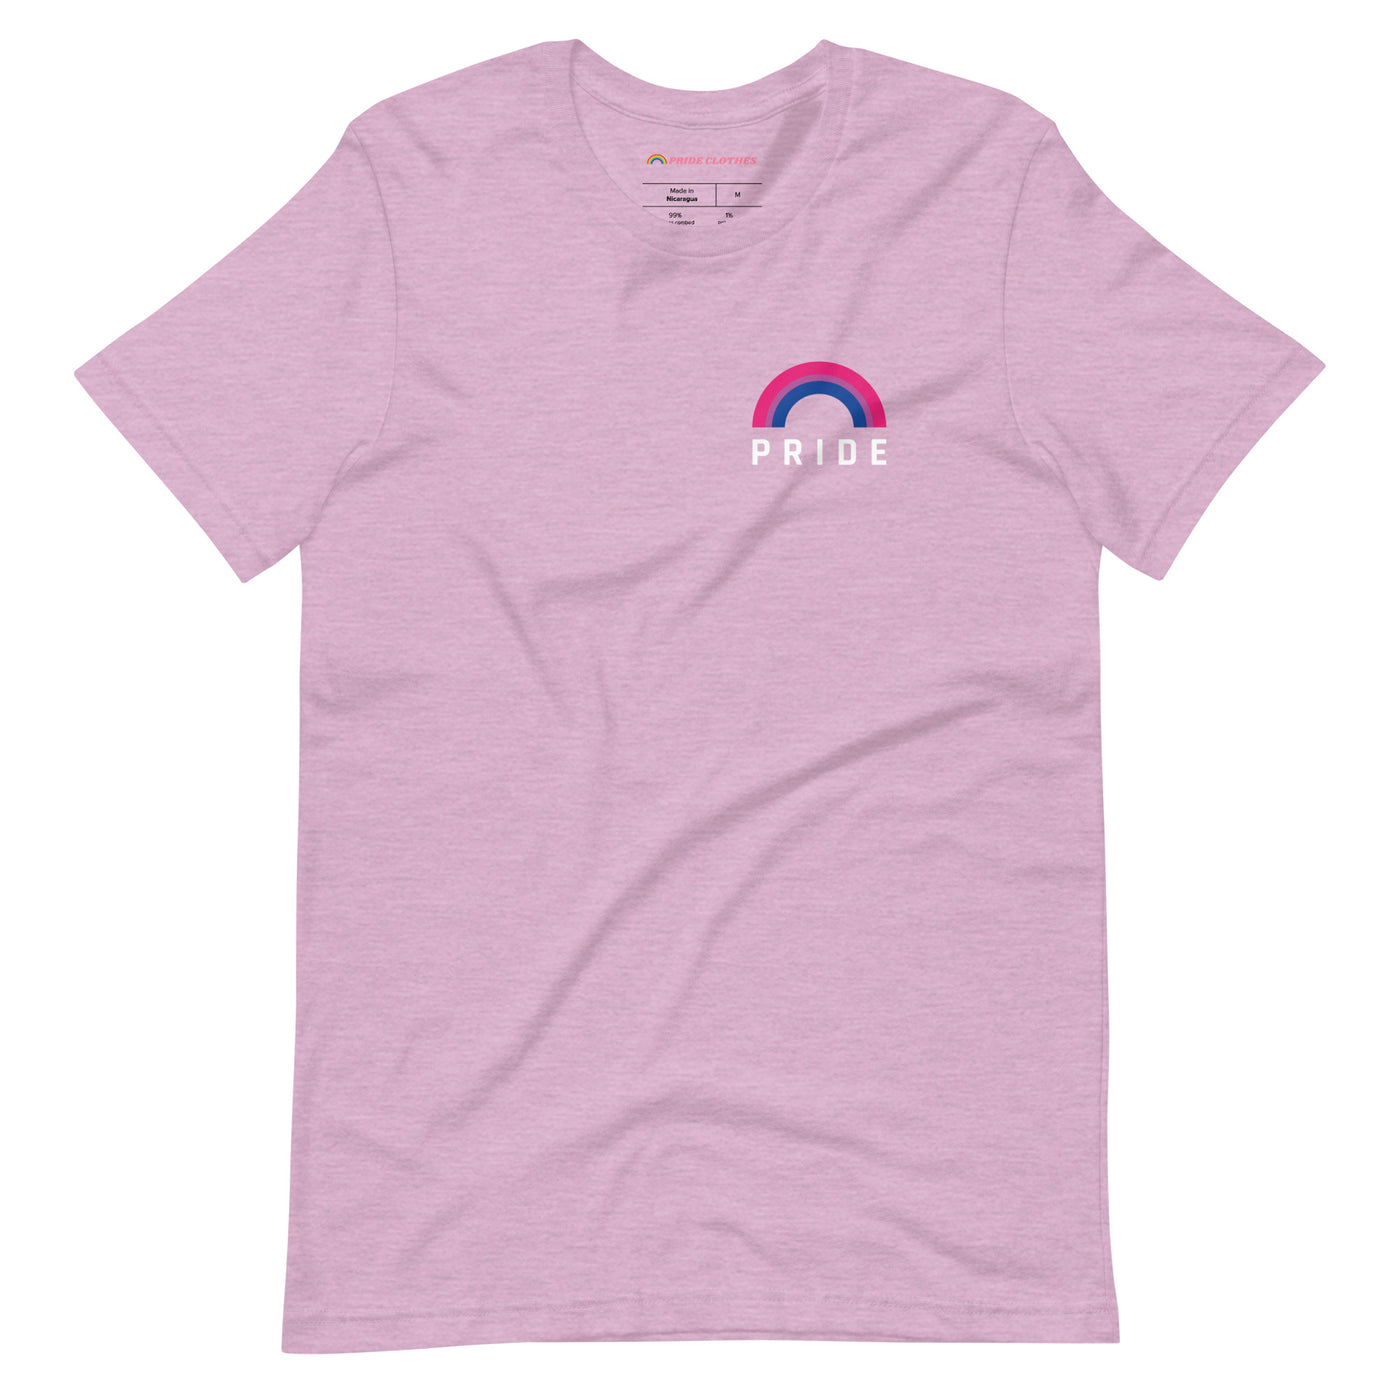 Pride Clothes - I Love Both Bisexual Pride Rainbow TShirt - Heather Prism Lilac